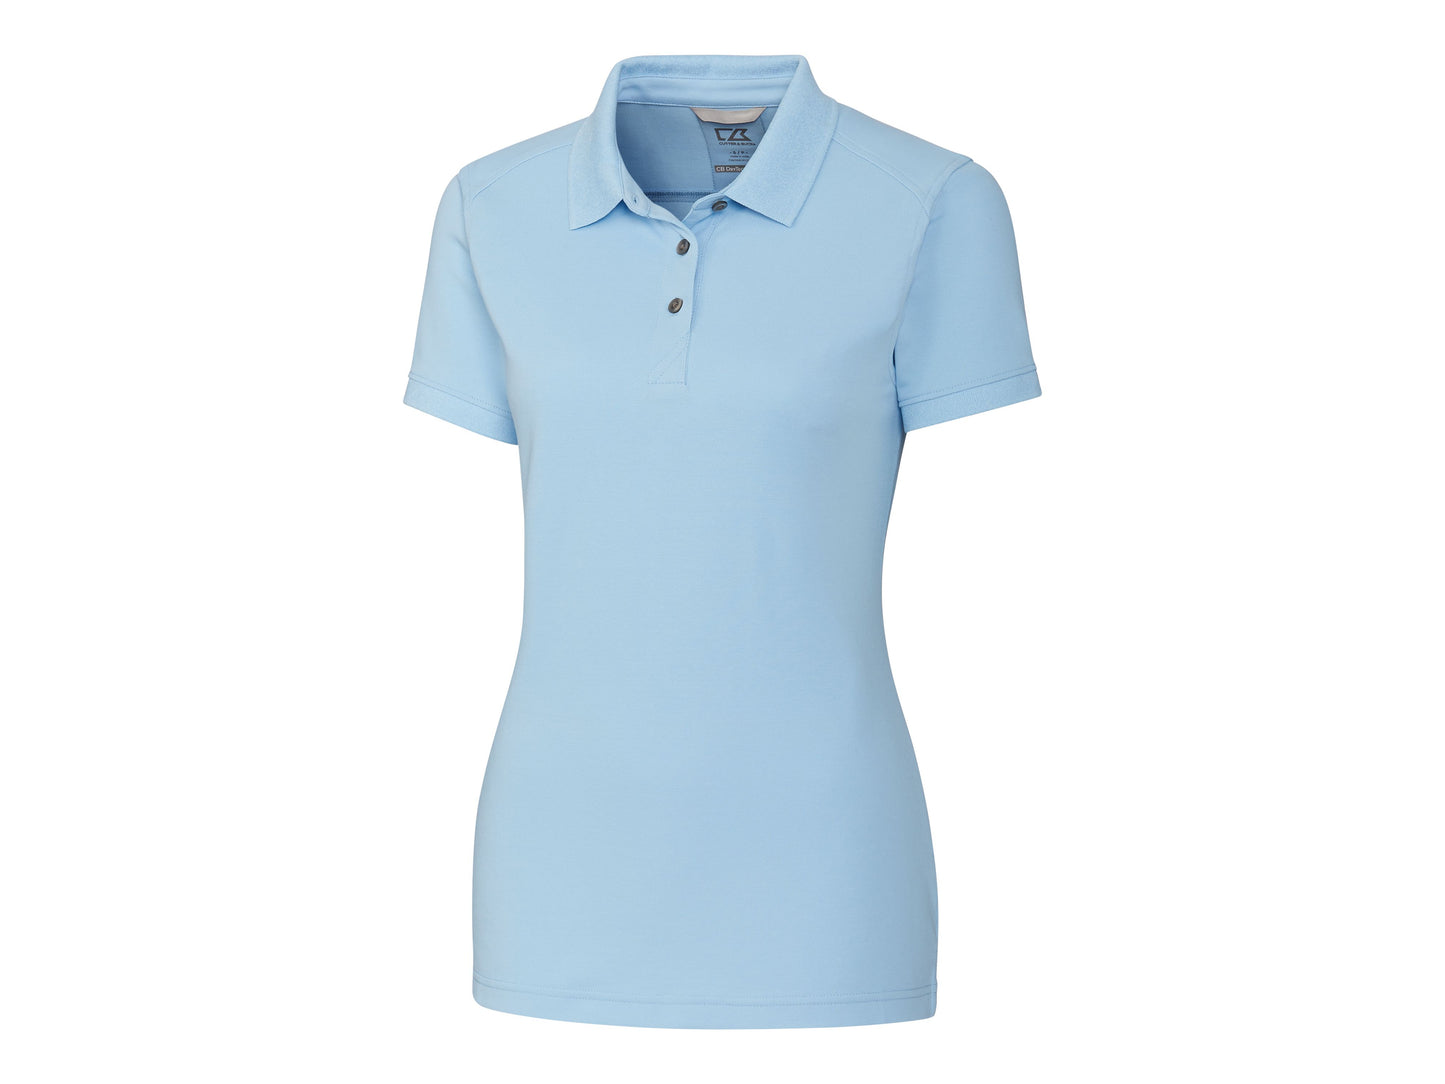 Cutter and Buck Shirts Advantage Polo (Women's Cut) - LCK08685 - Inlet